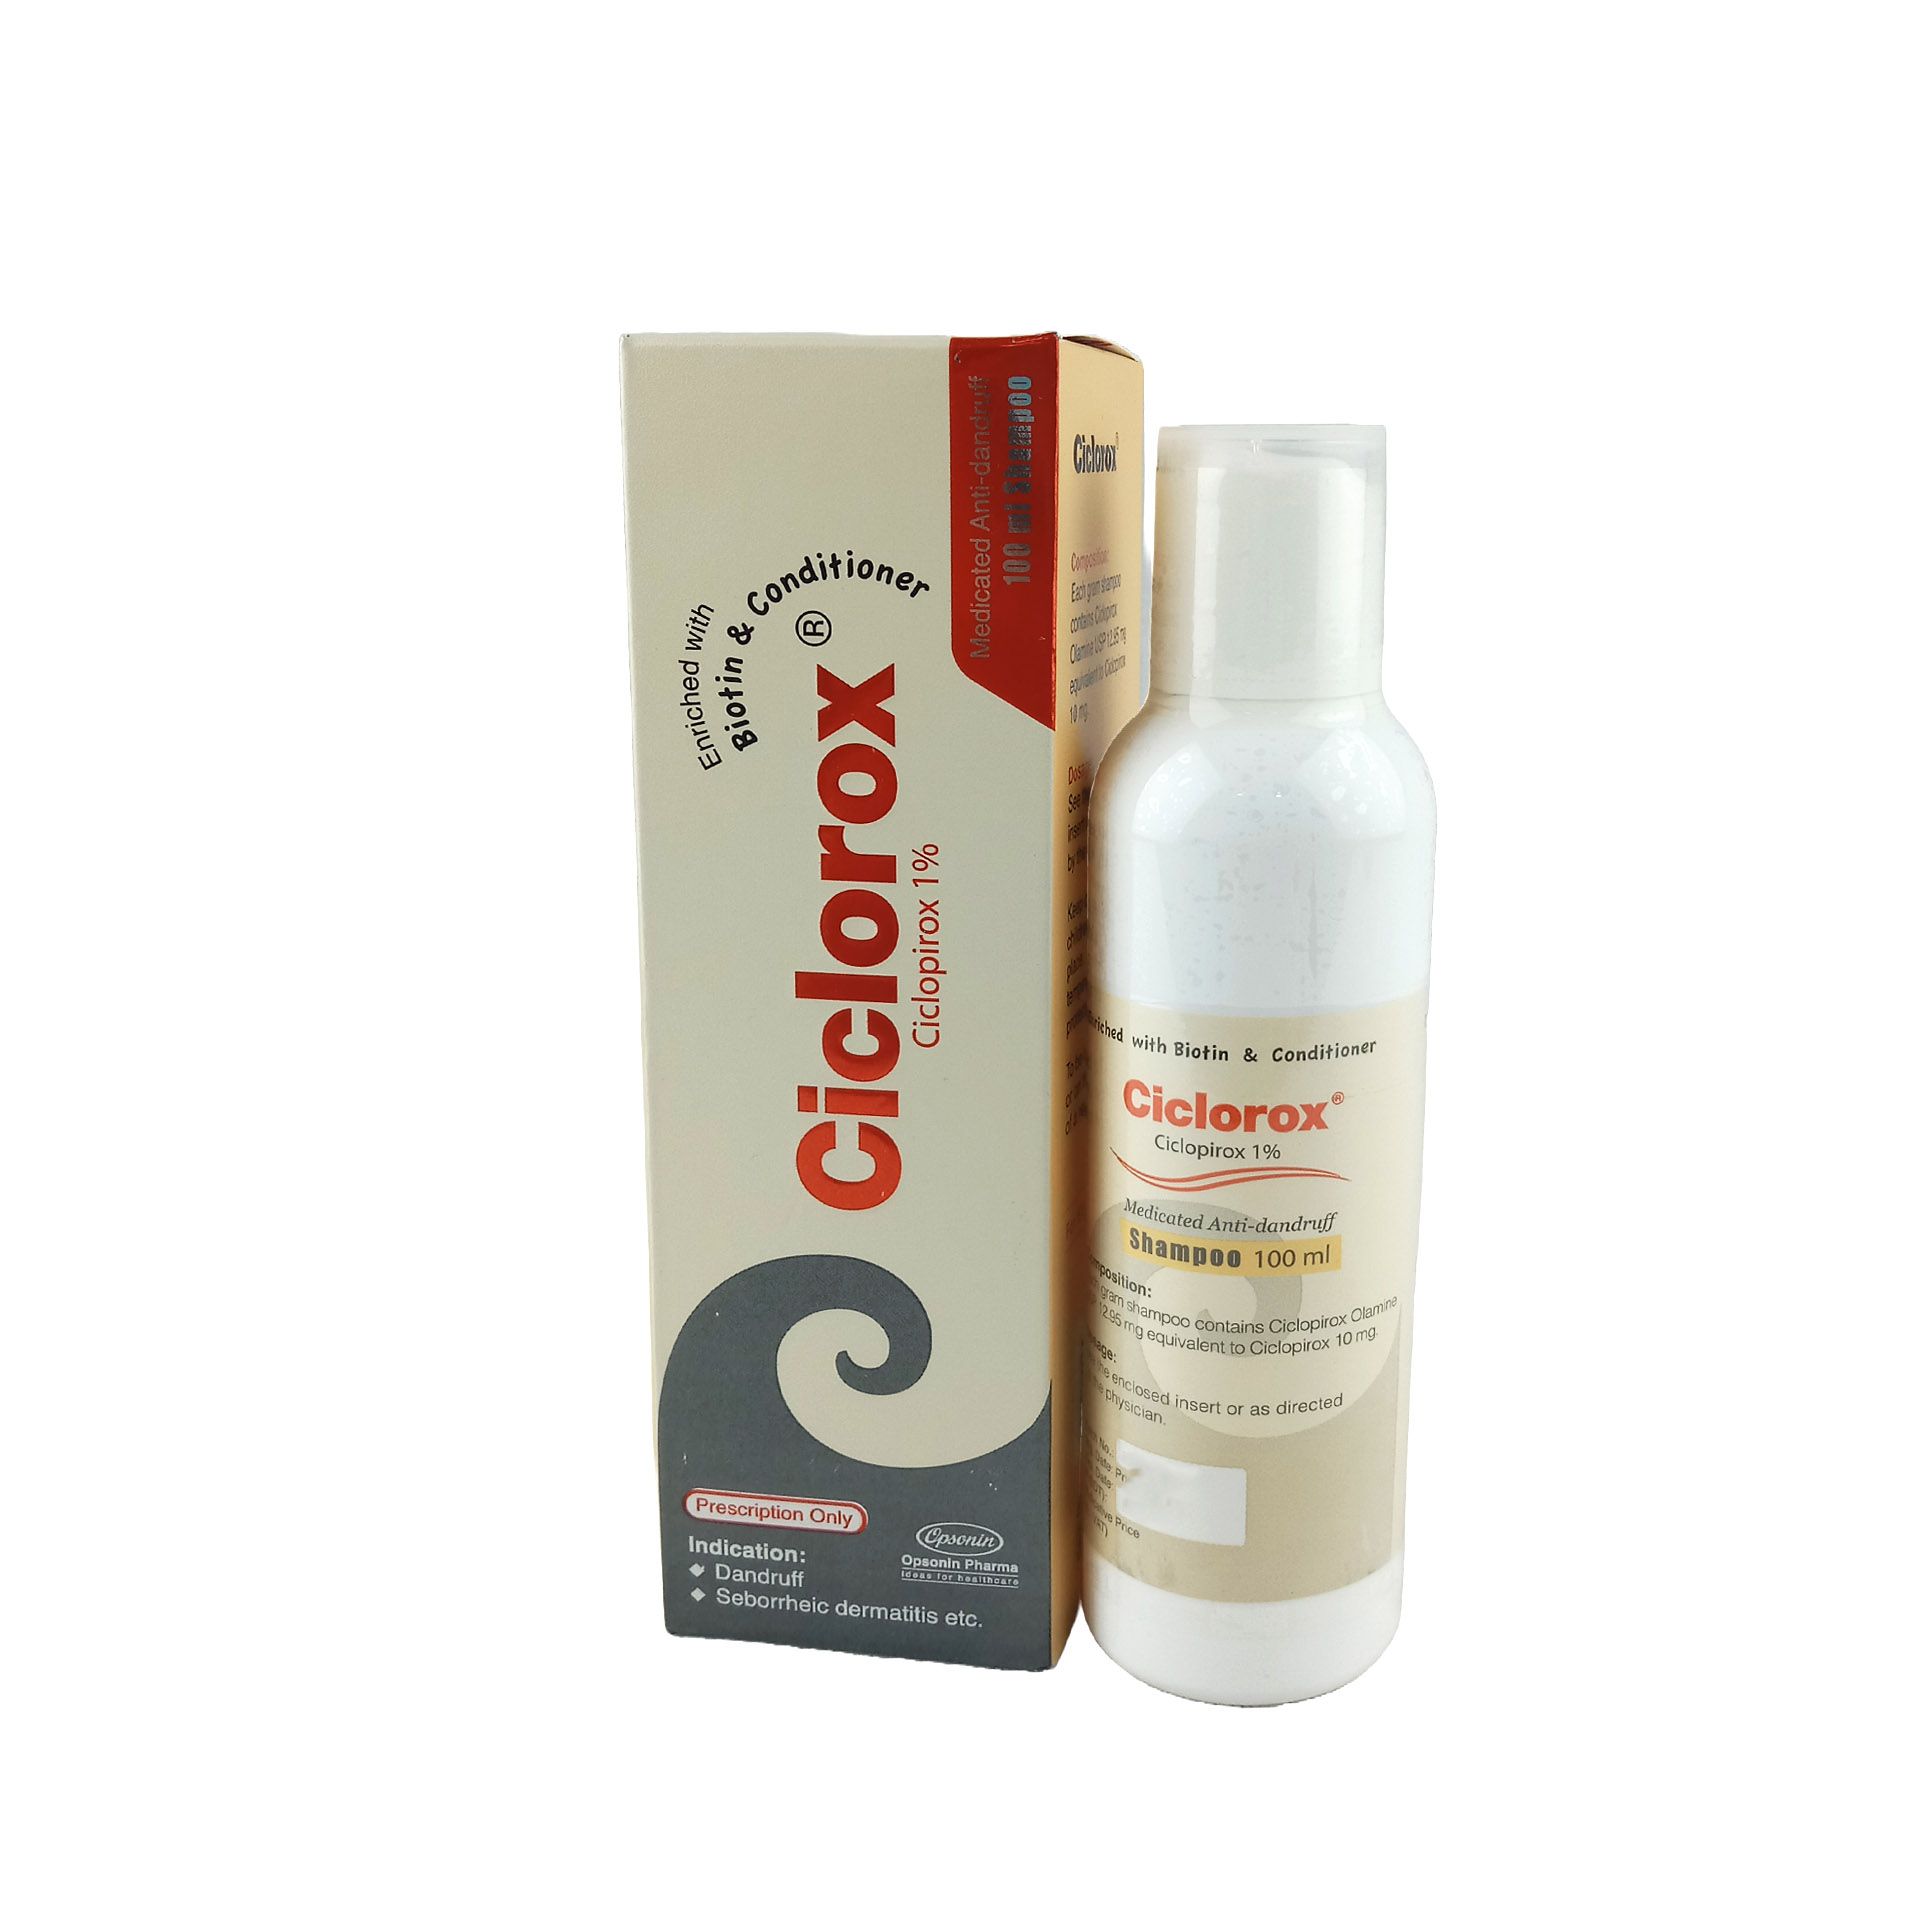 Ciclorox Shampoo 100ml shampoo